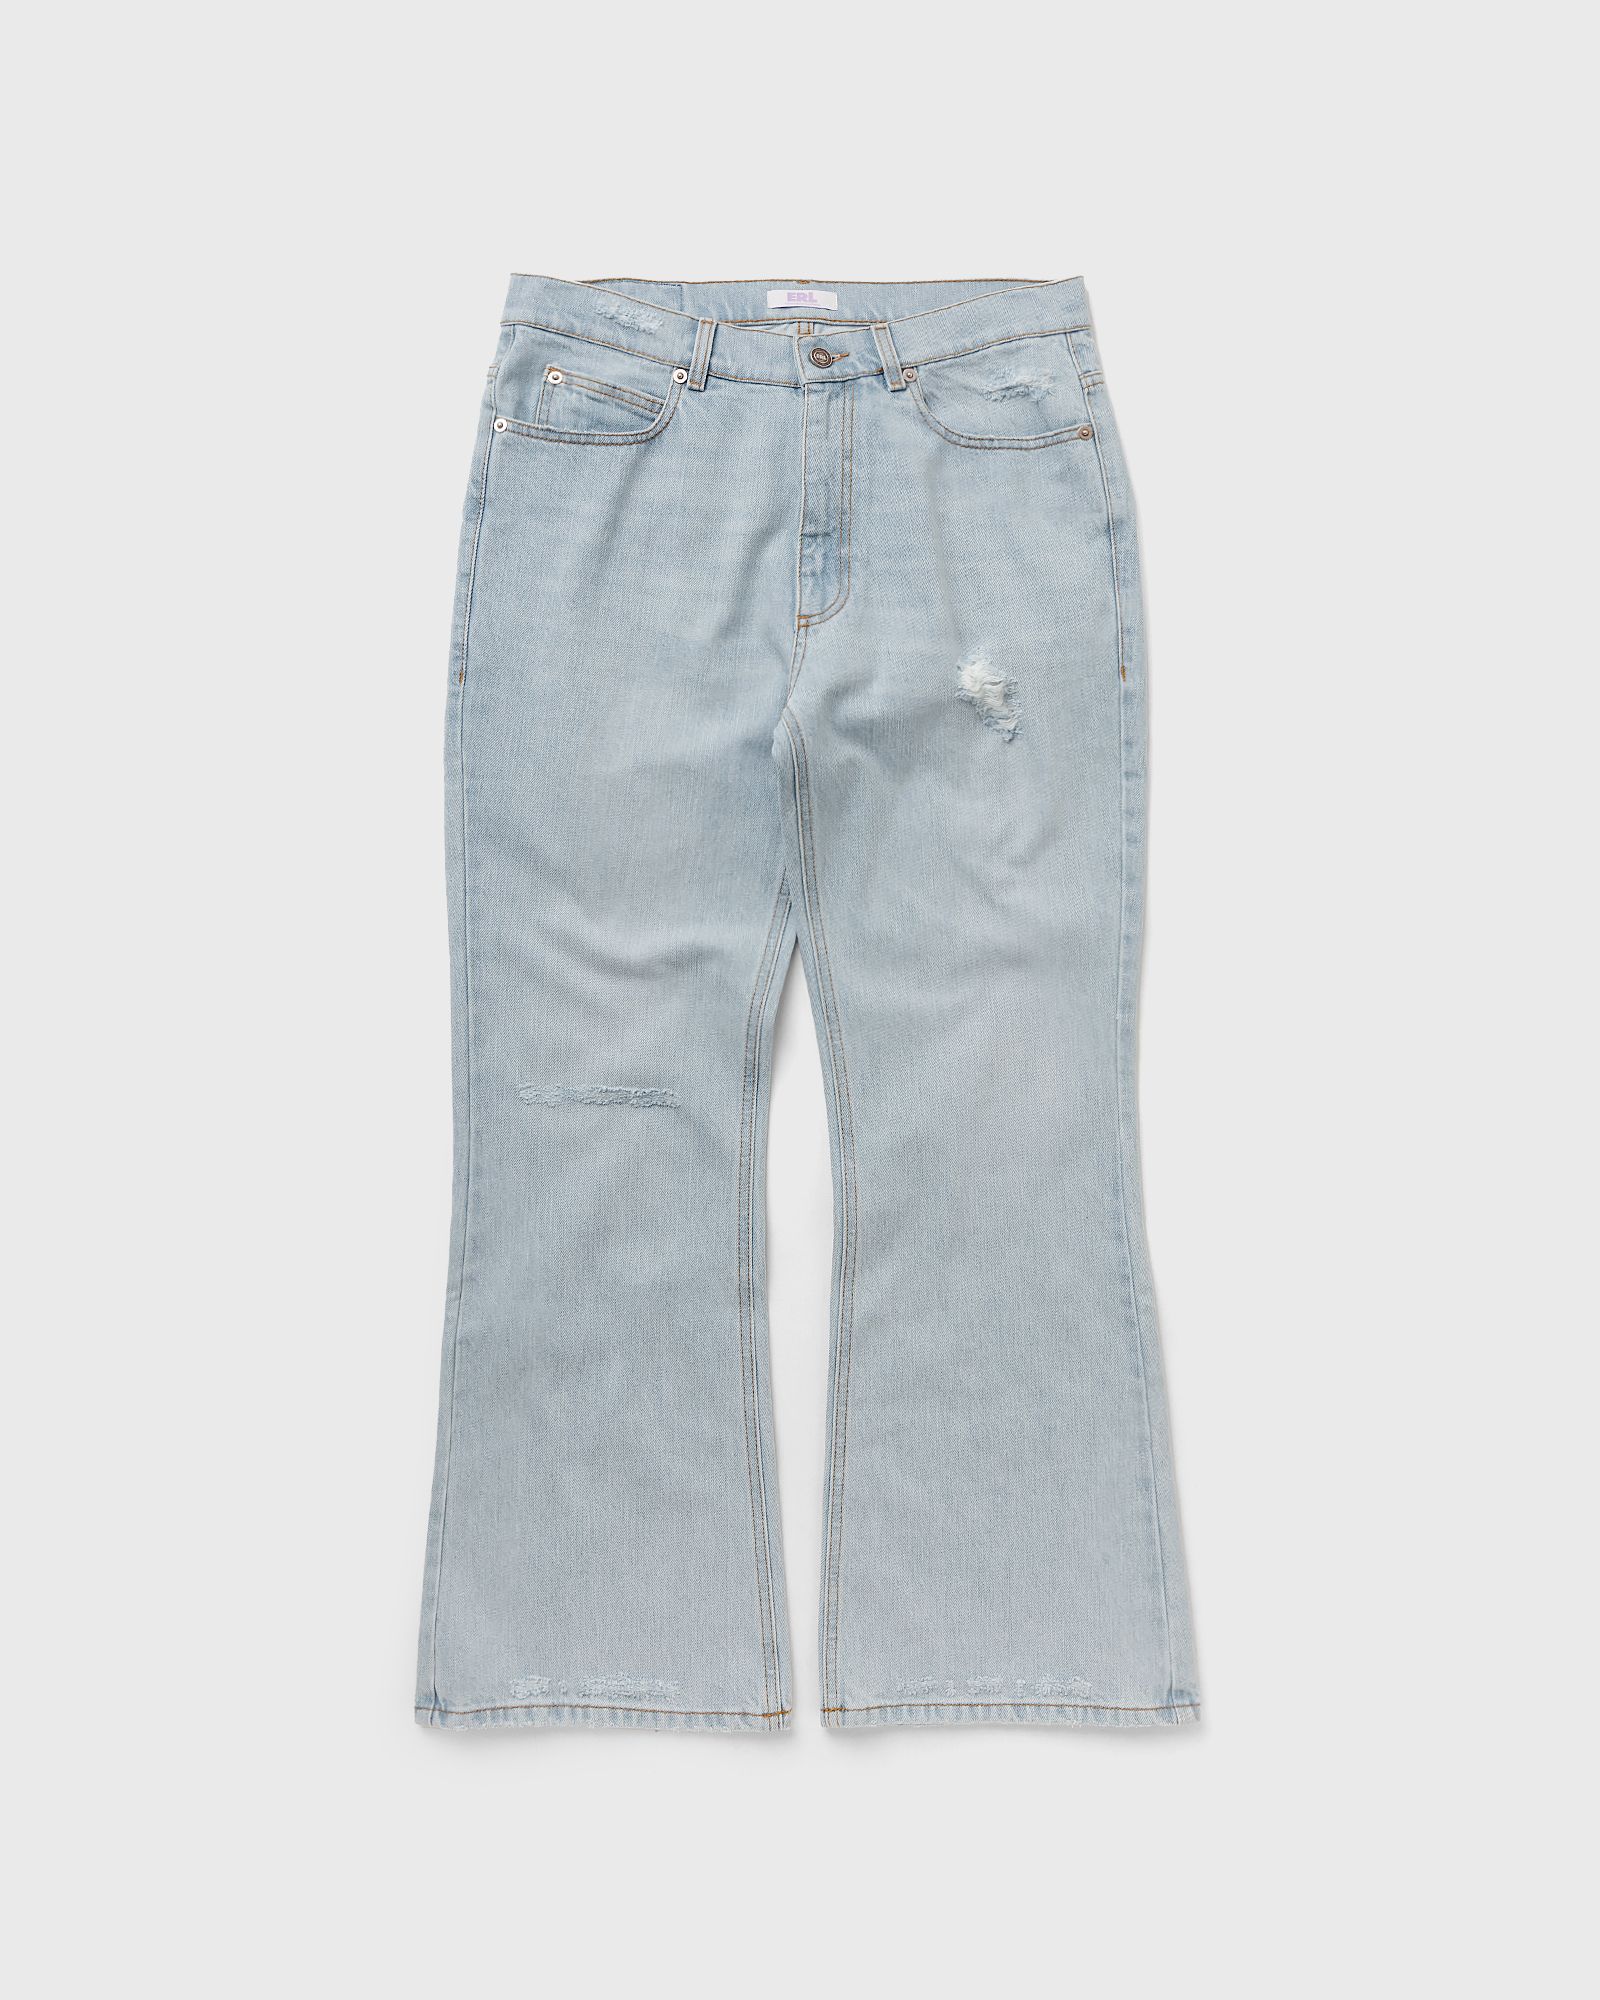 ERL - distressed denim pants woven men jeans blue in größe:s